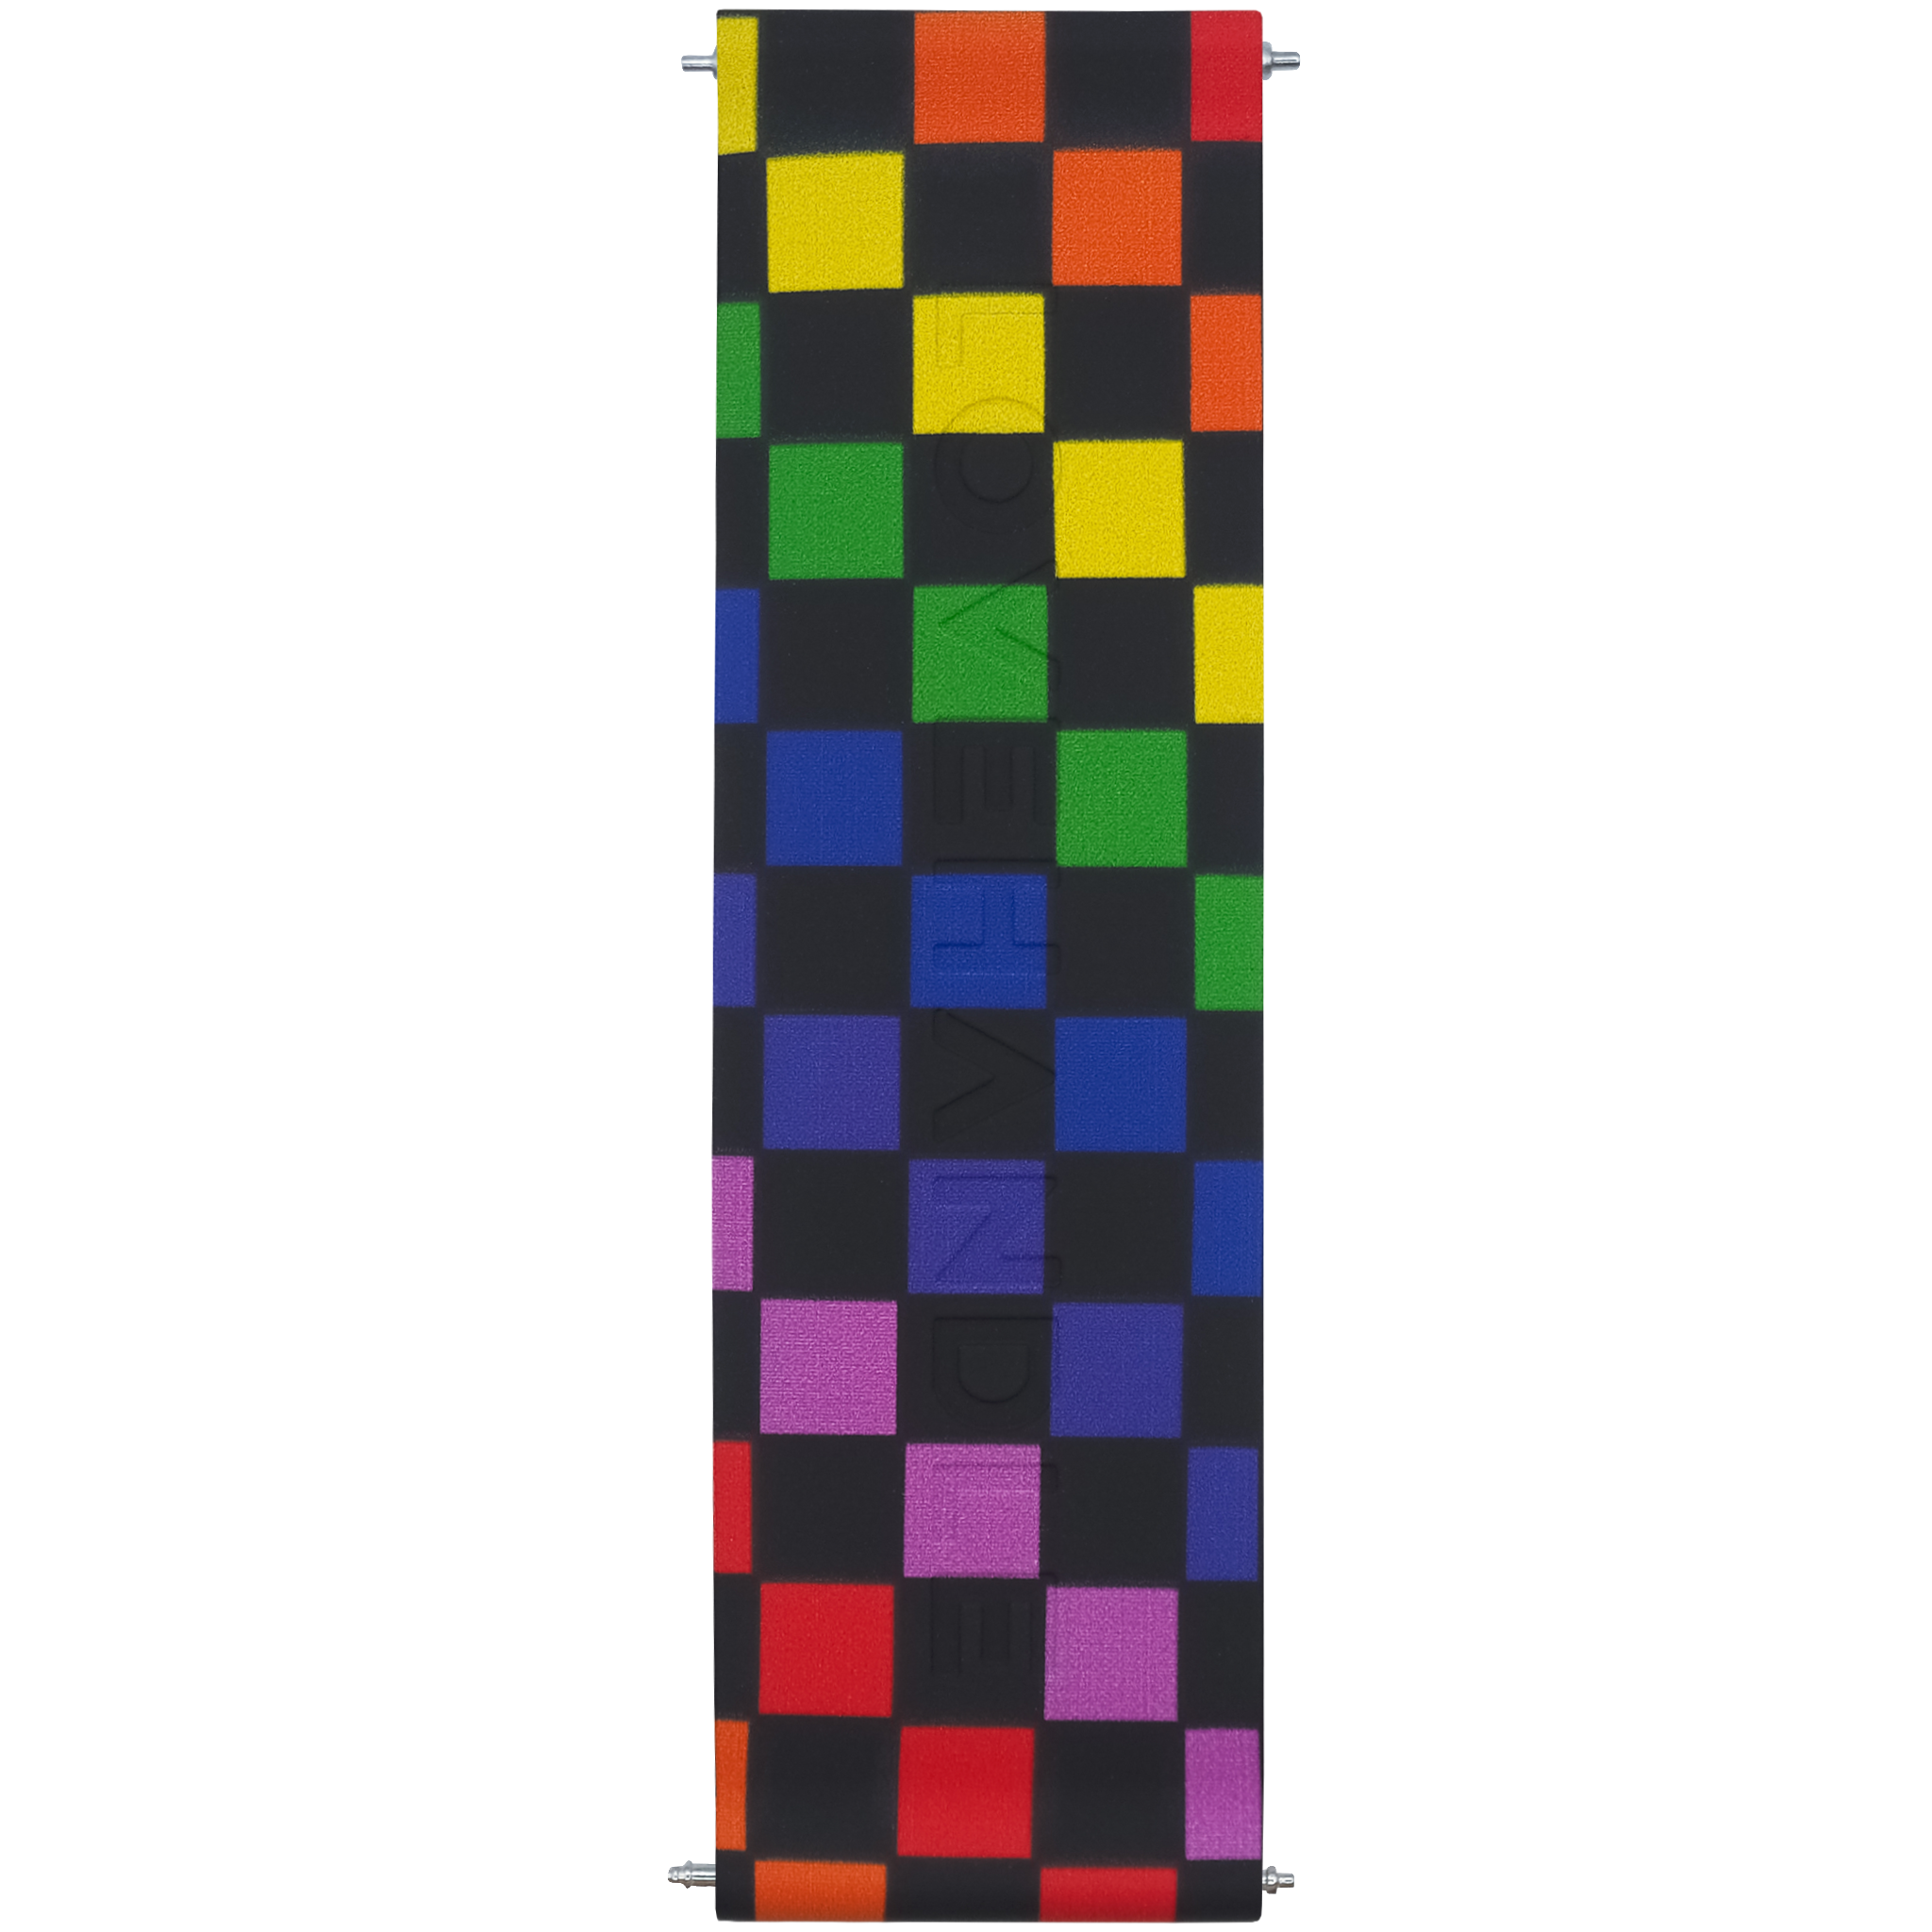 PRO Strap - Checkered Rainbow